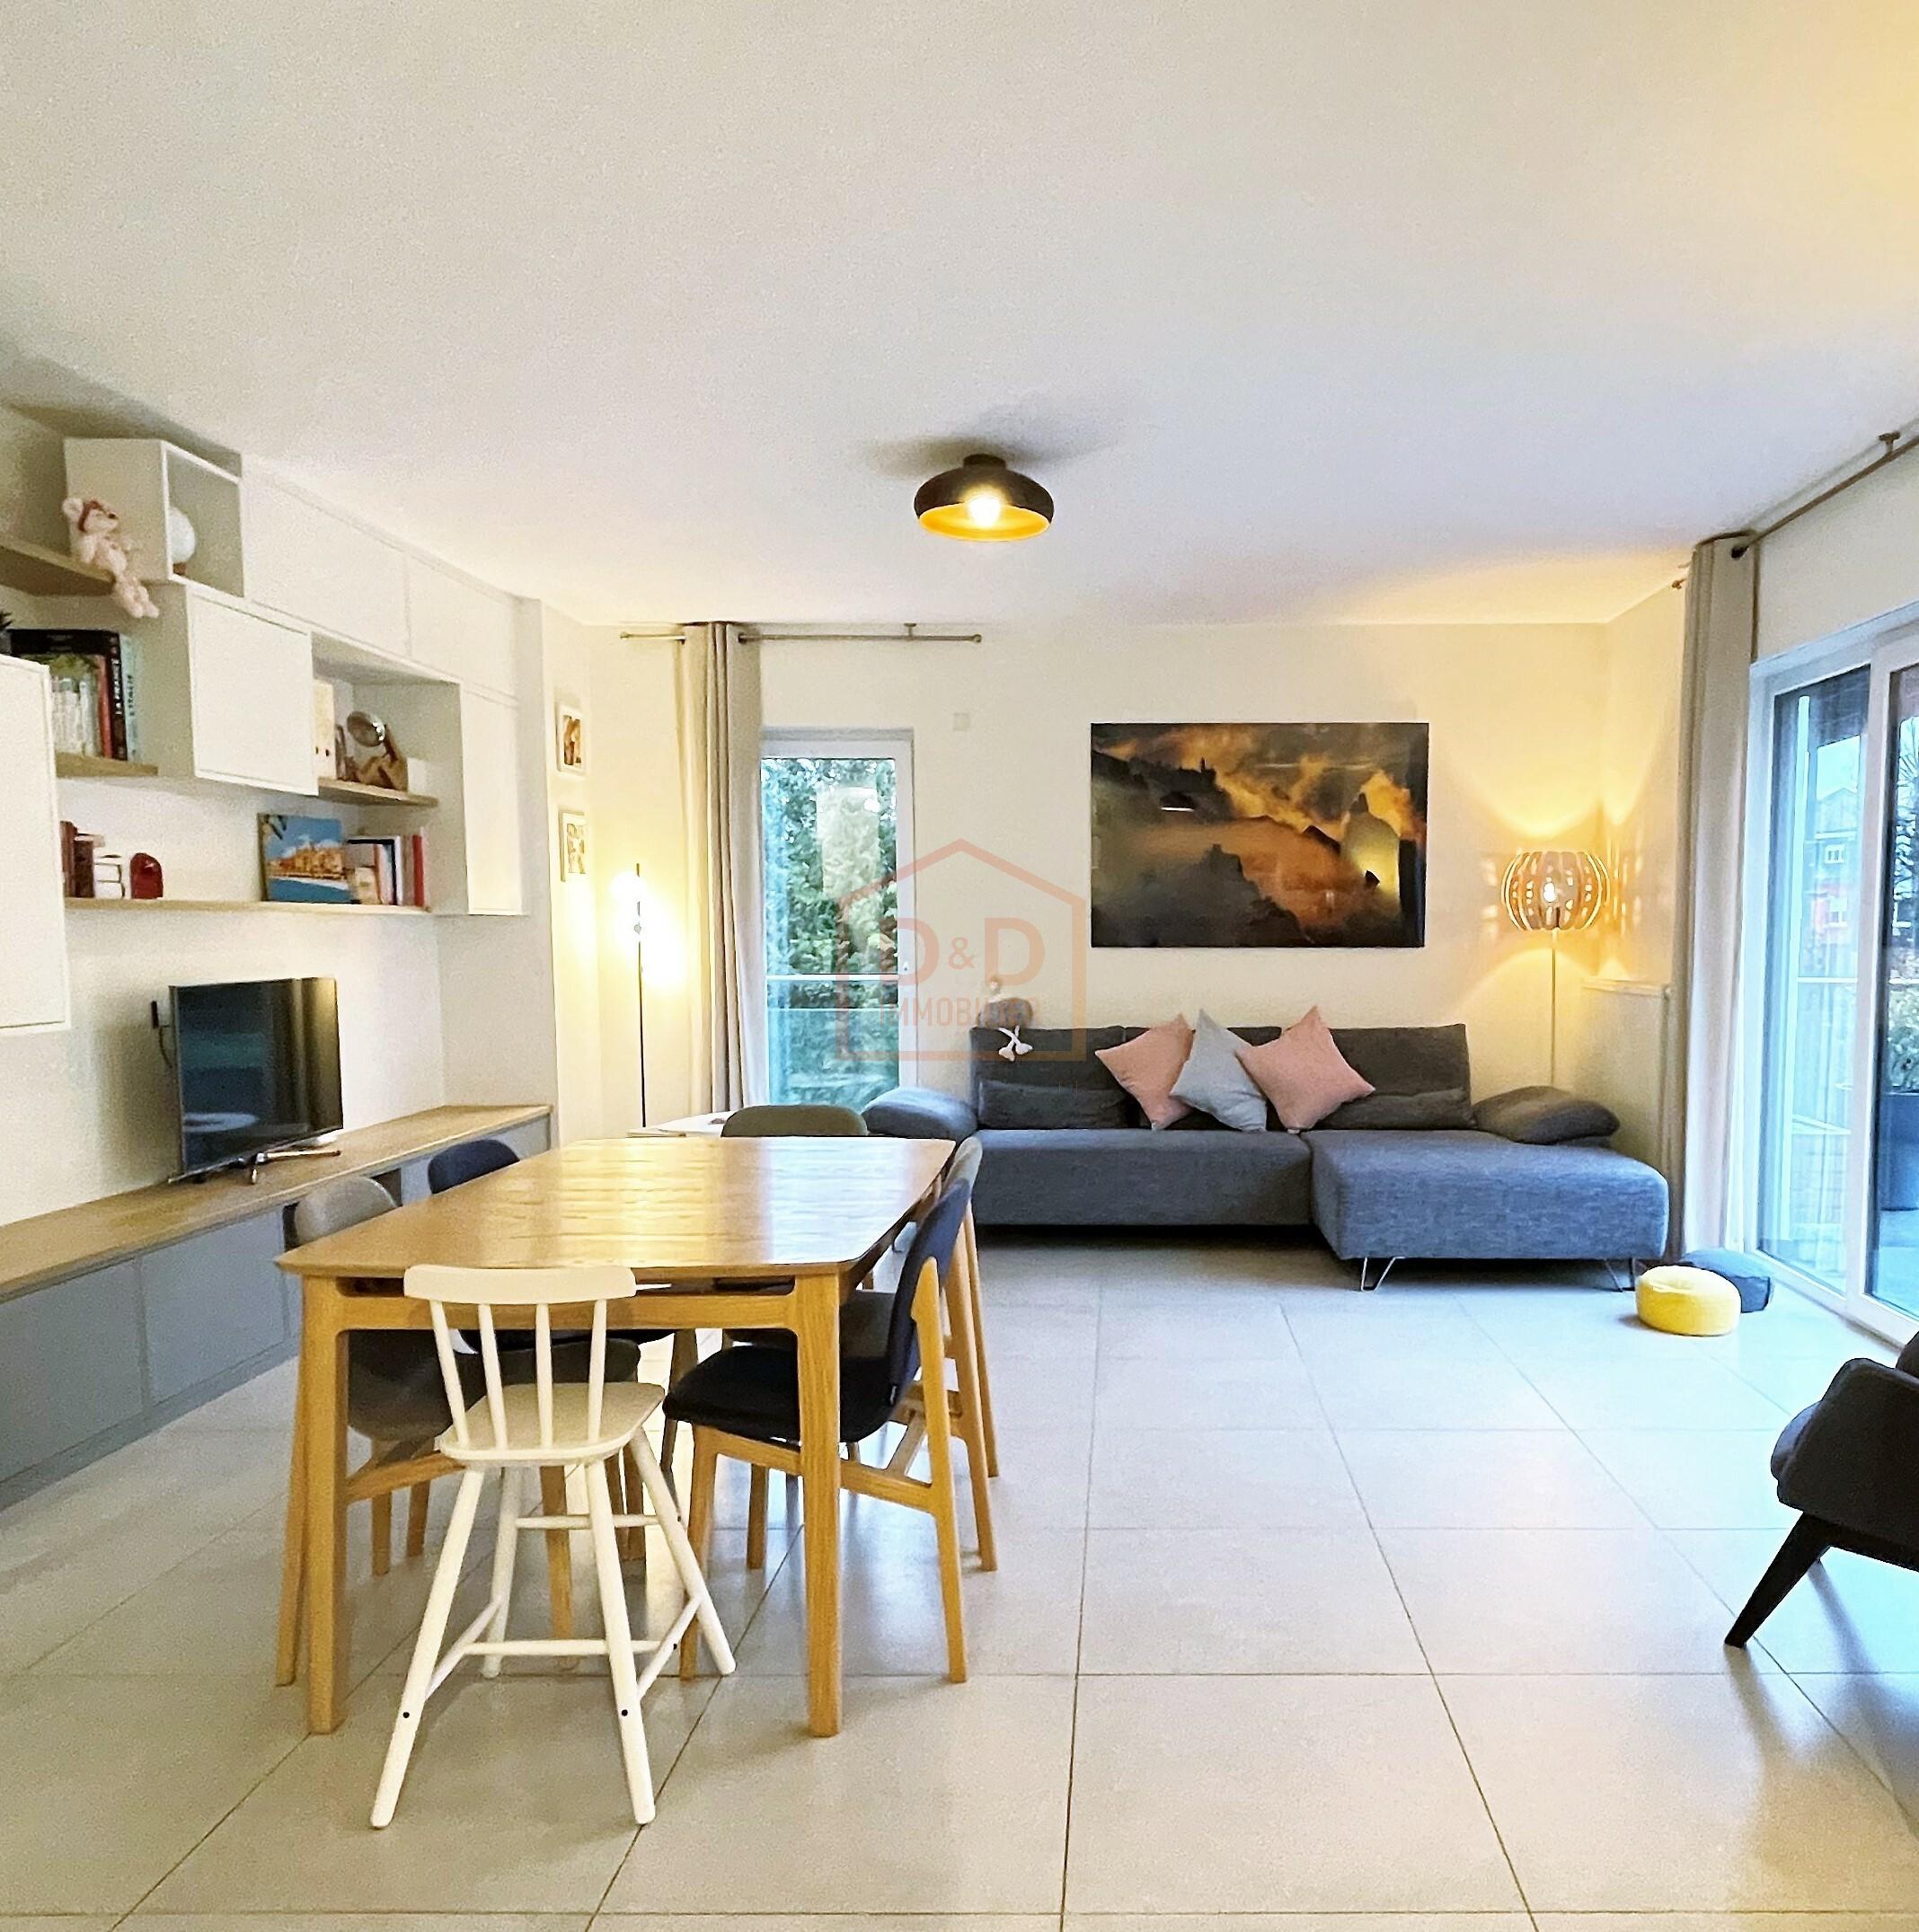 Appartement à Dalheim, 85,15 m², 2 chambres, 1 salle de bain, 2 garages, 1 €